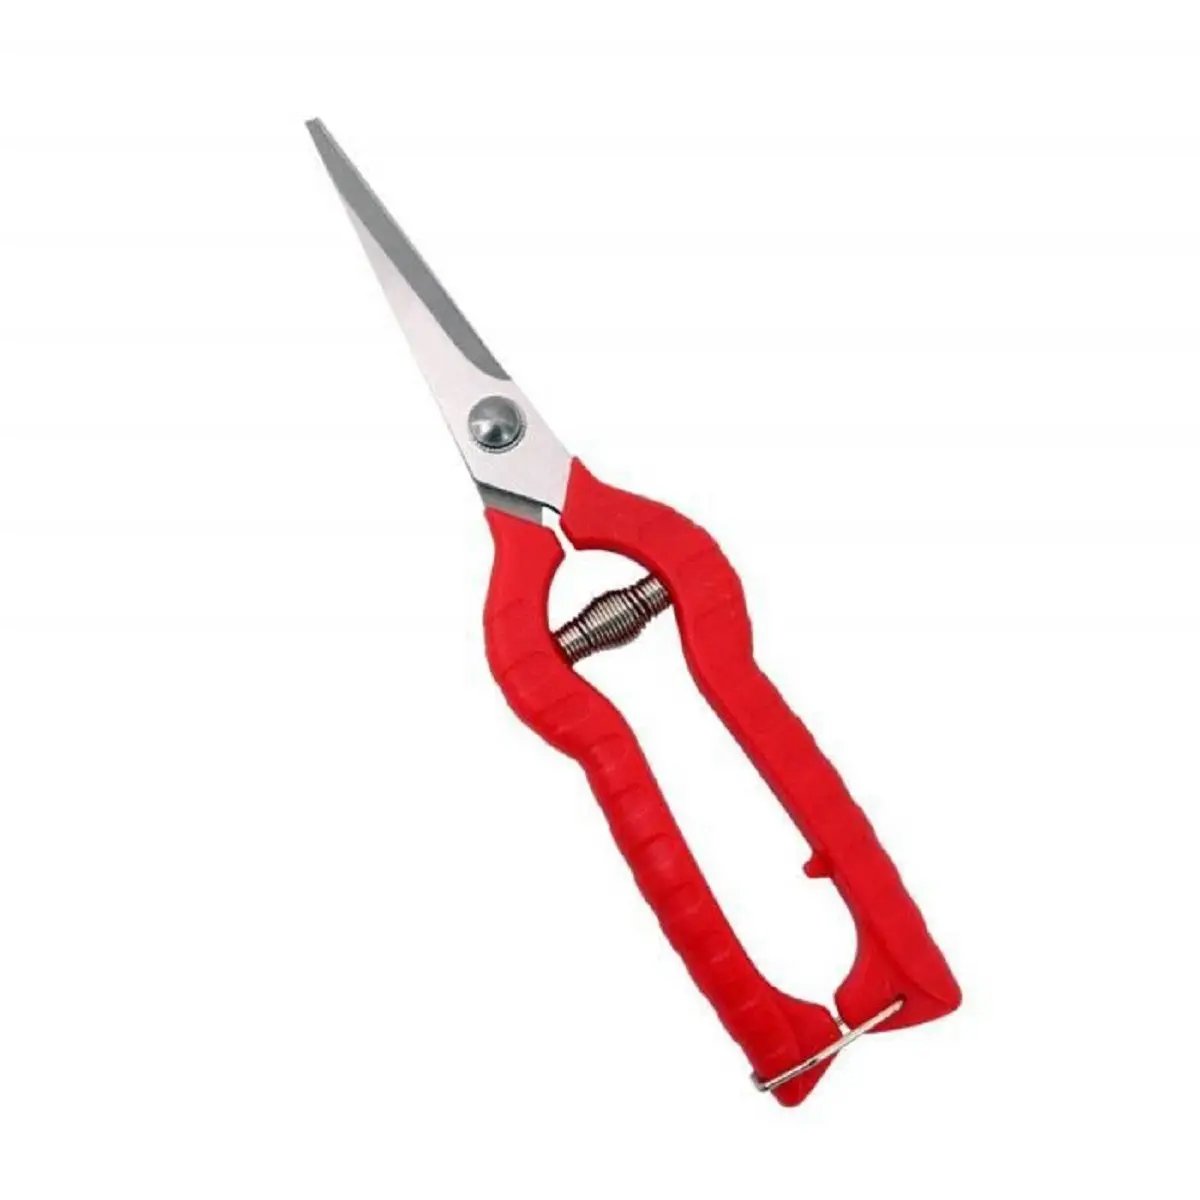 13cm secateurs scissors